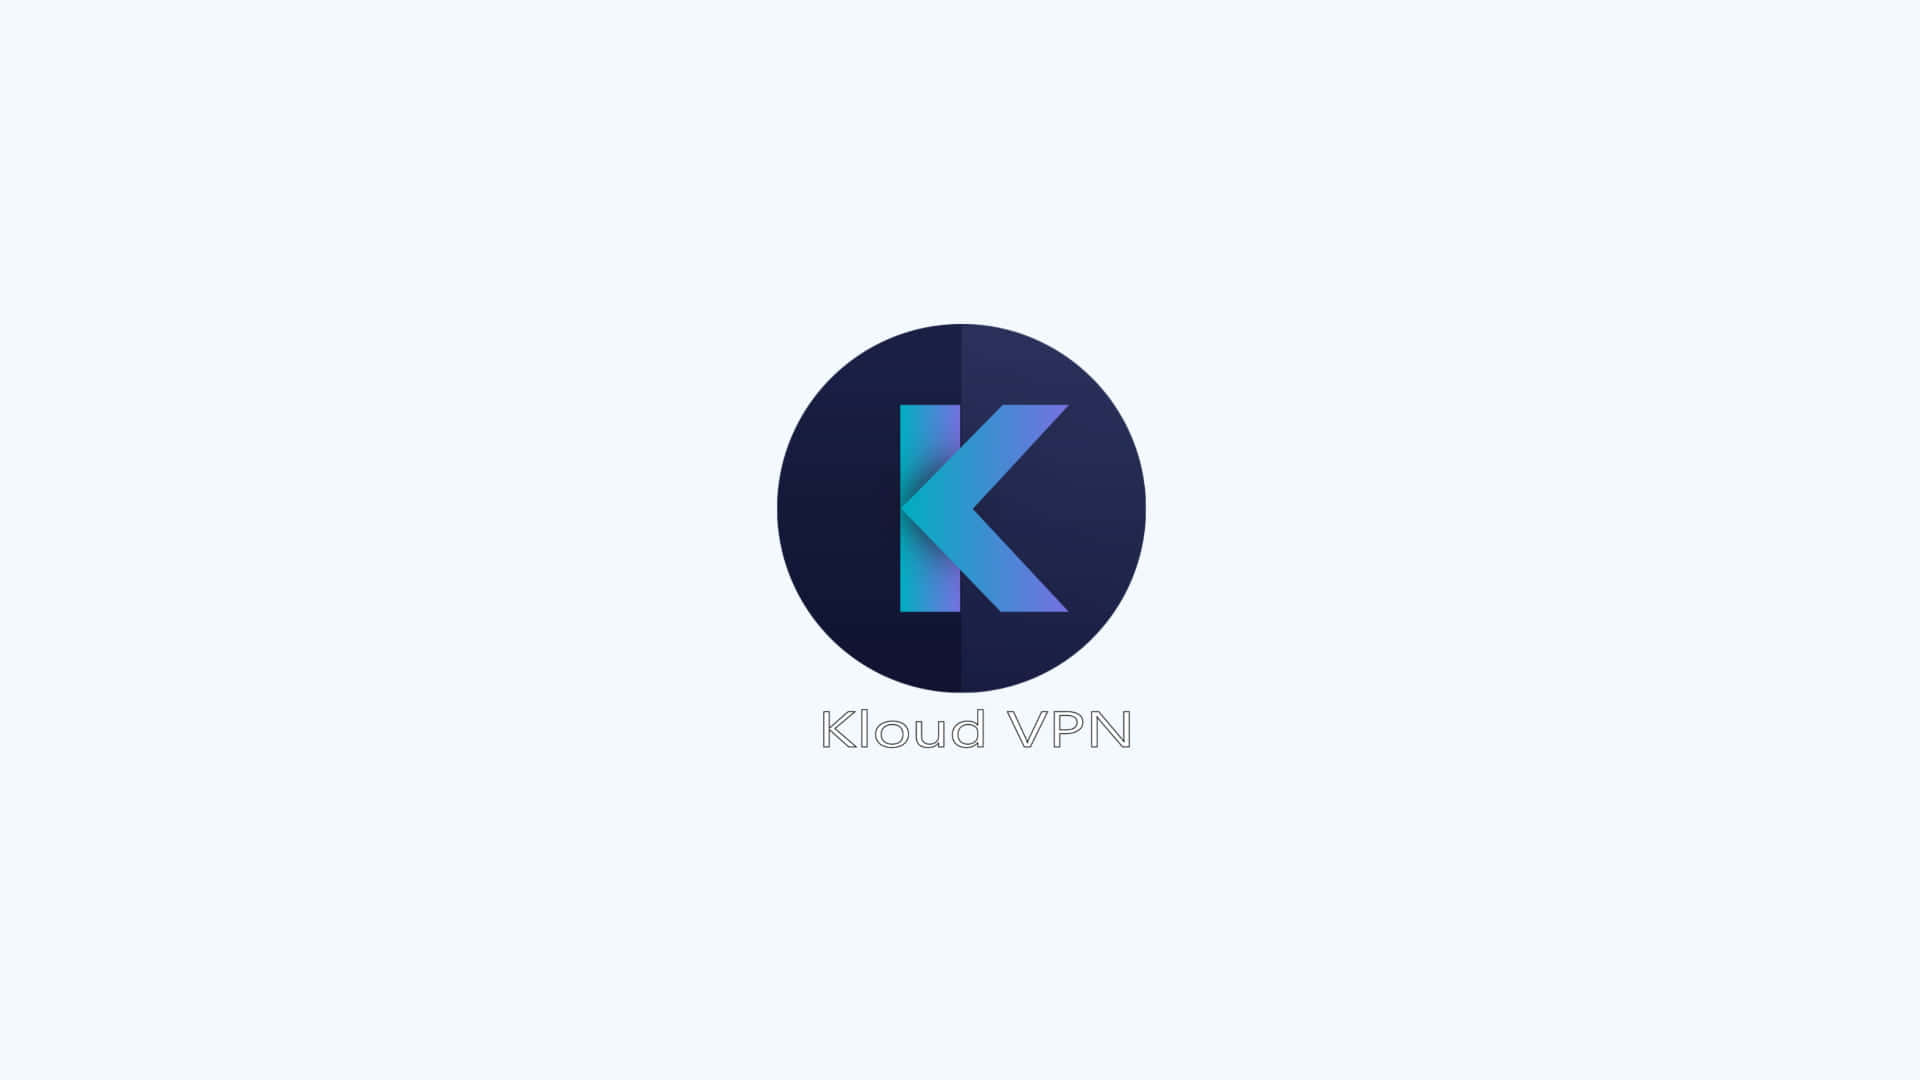 Kloud Vpn Blue Round Logo Wallpaper